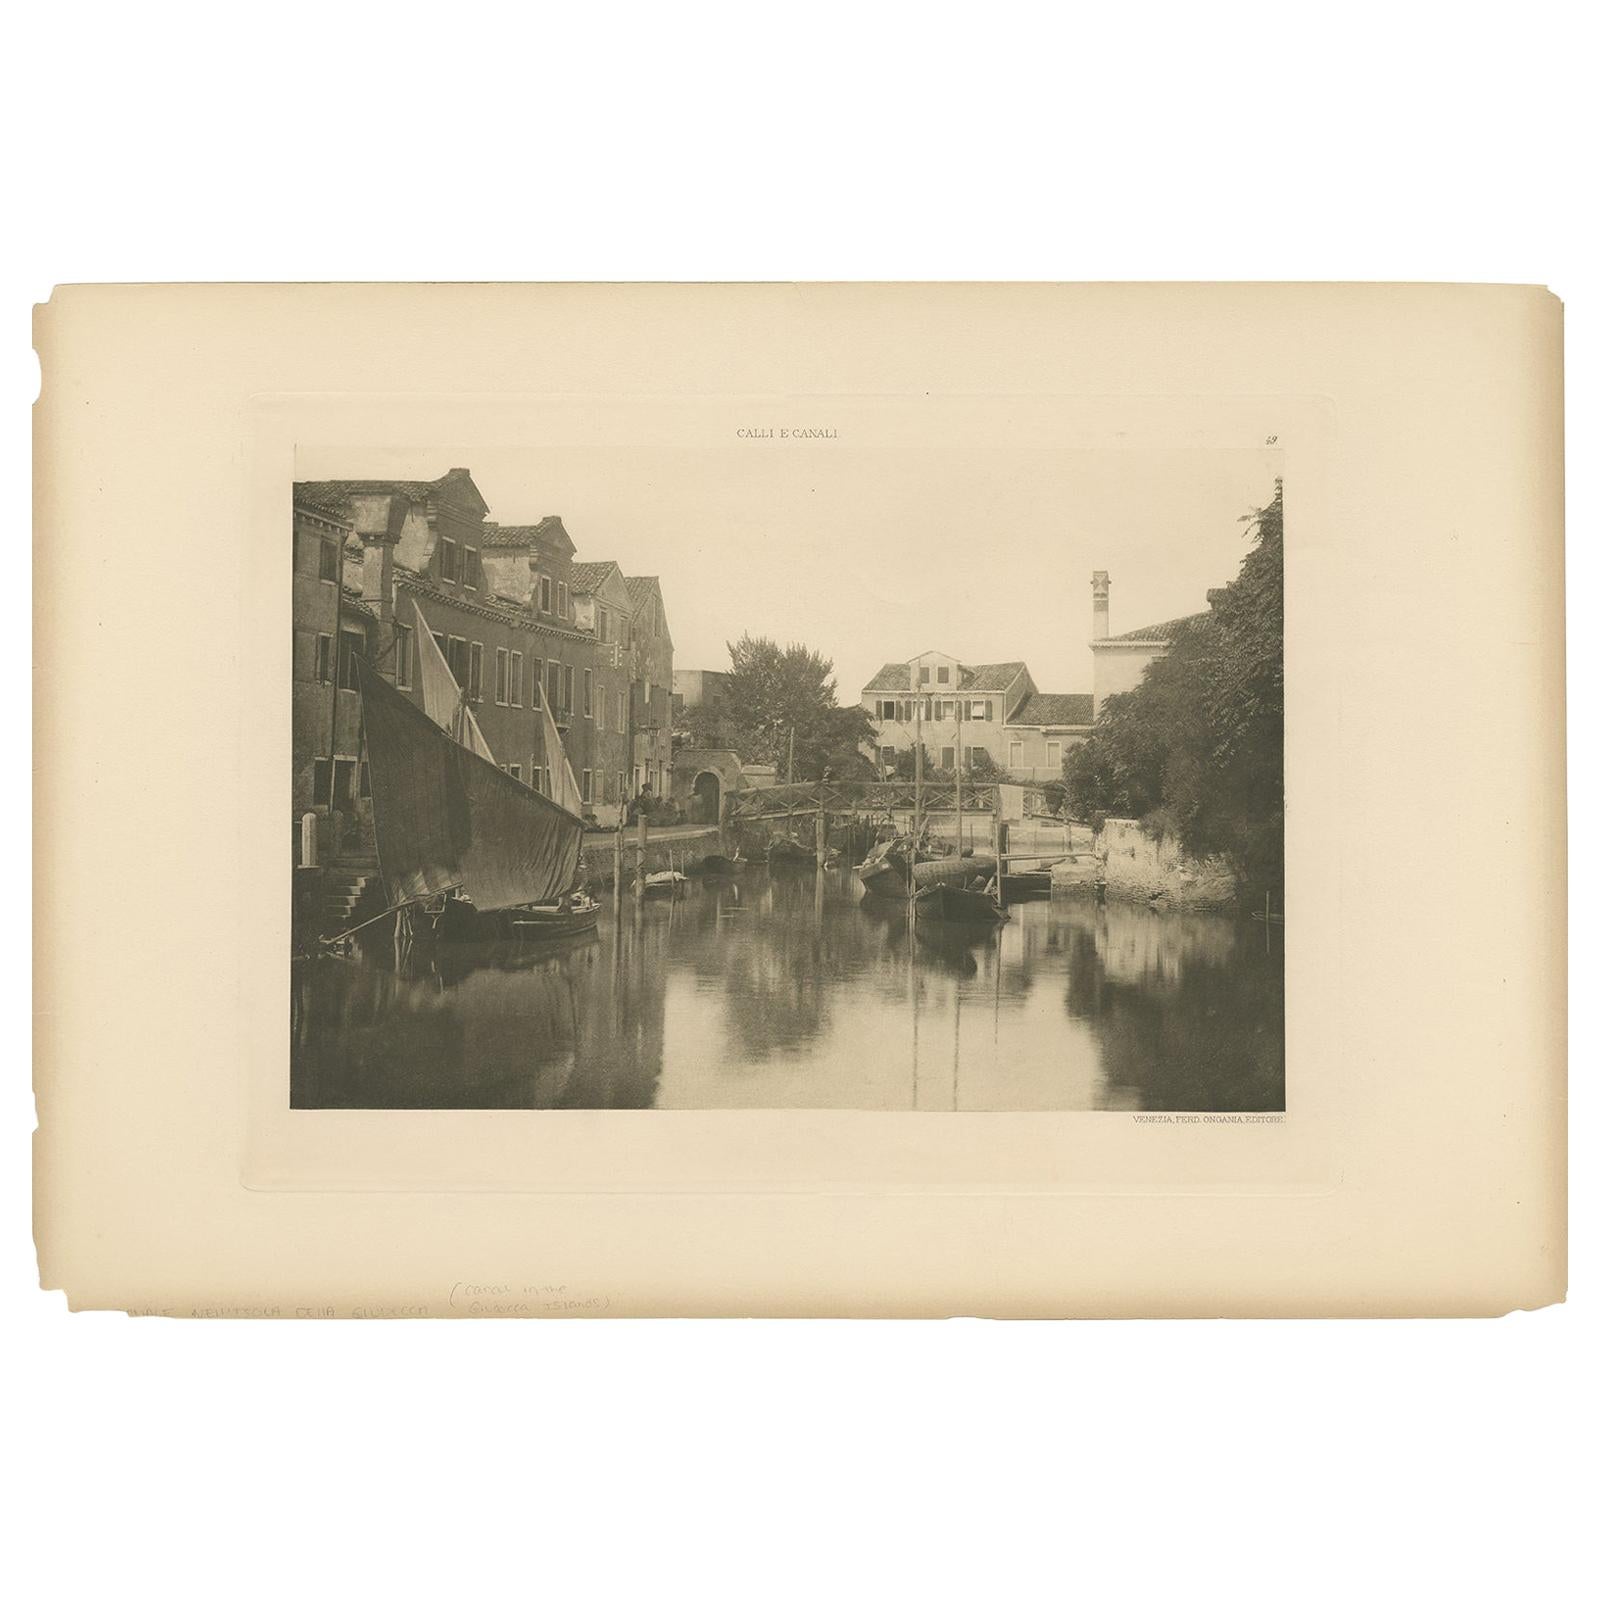 Pl. 49 Antique Print of a Canal in the Giudecca Island of Venice, circa 1890